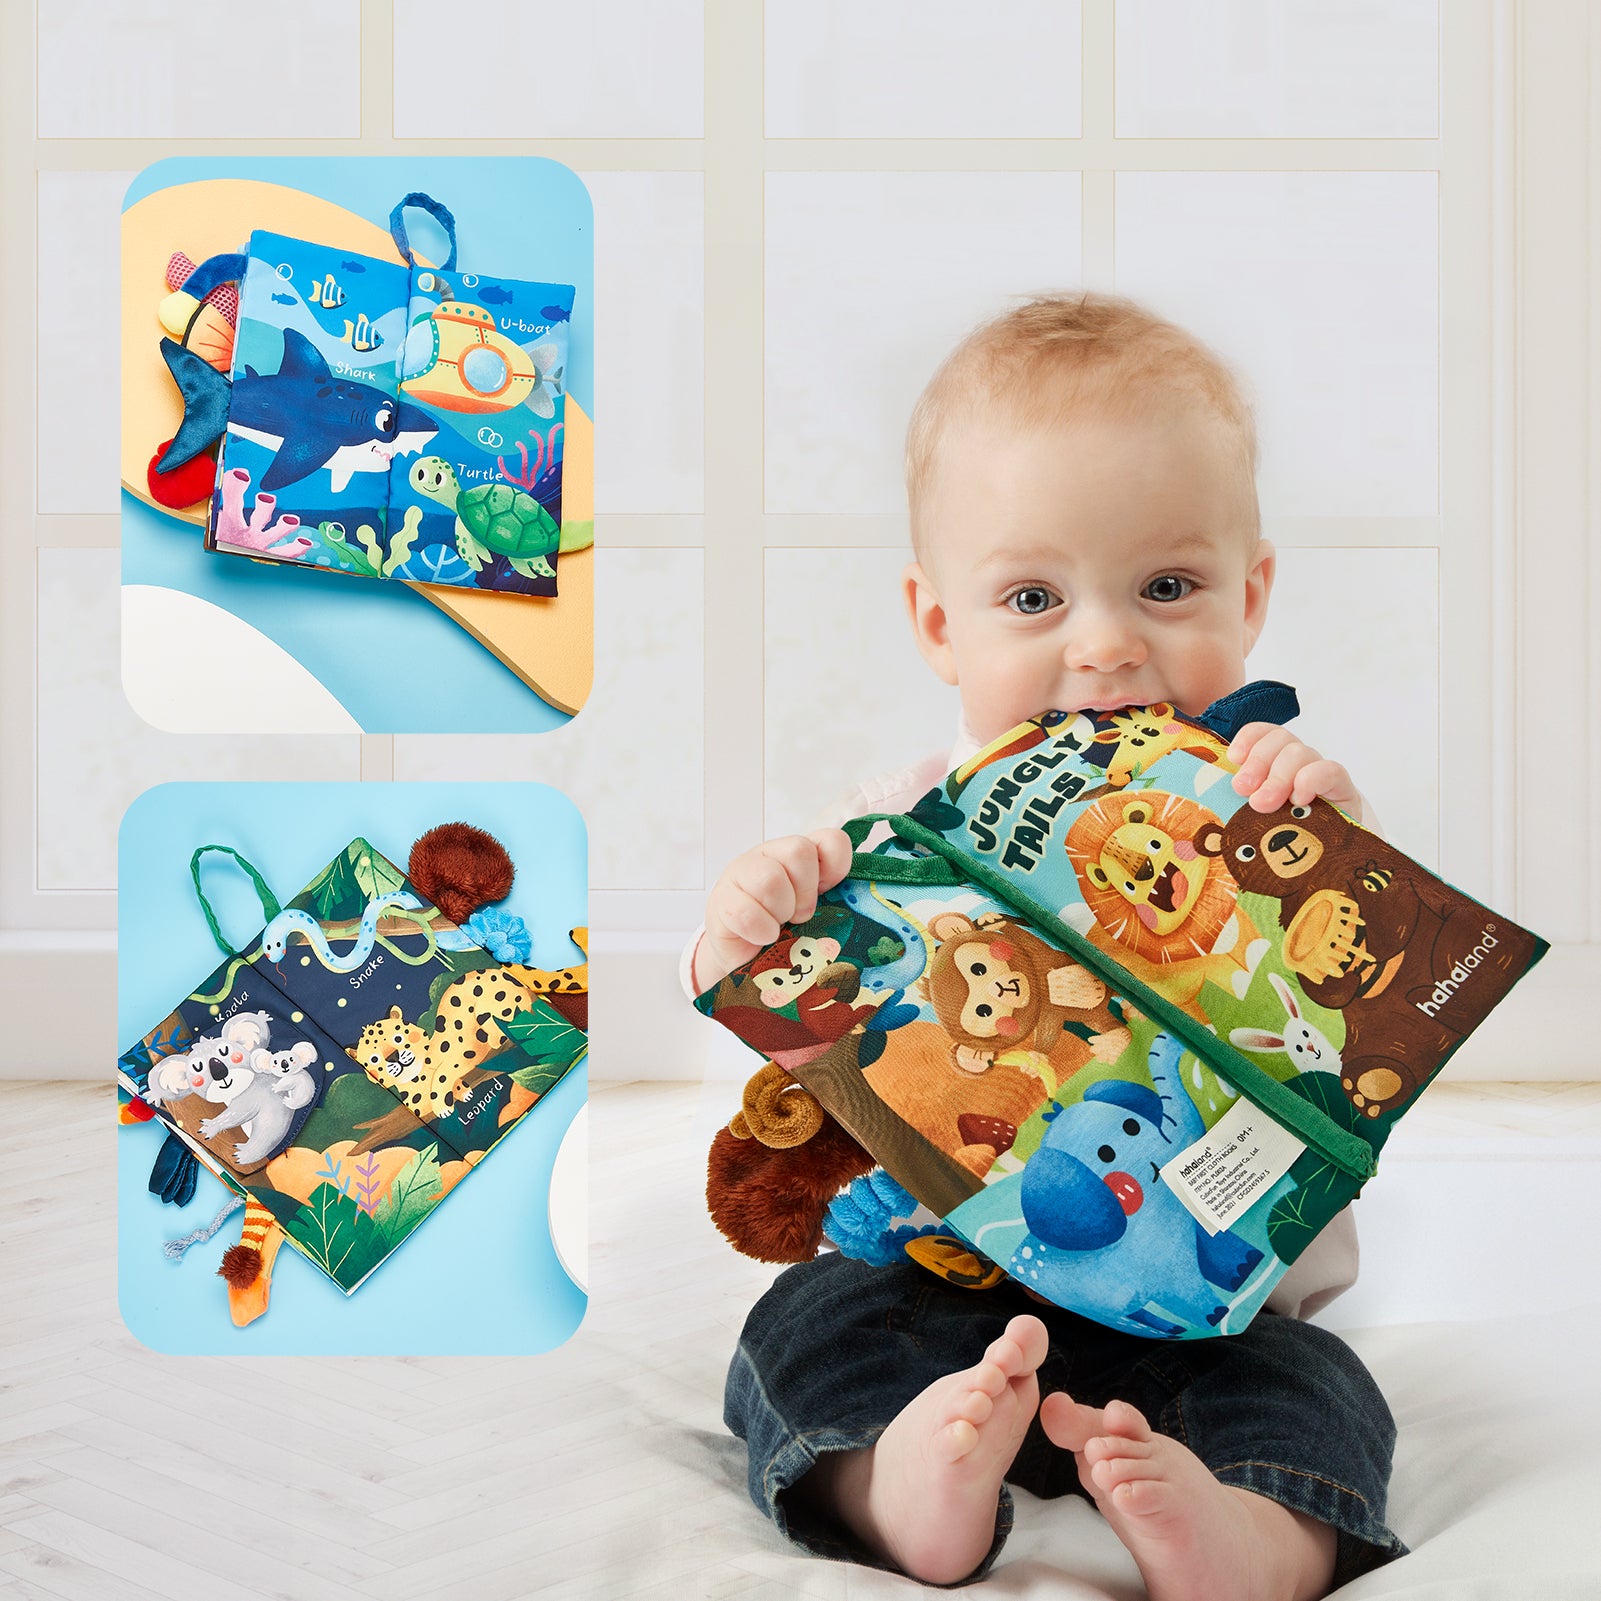 Libro de Tela para Bebés Kimmy el Koala - Tay Toys - 2 Etapas de Desarrollo  - Shopmami